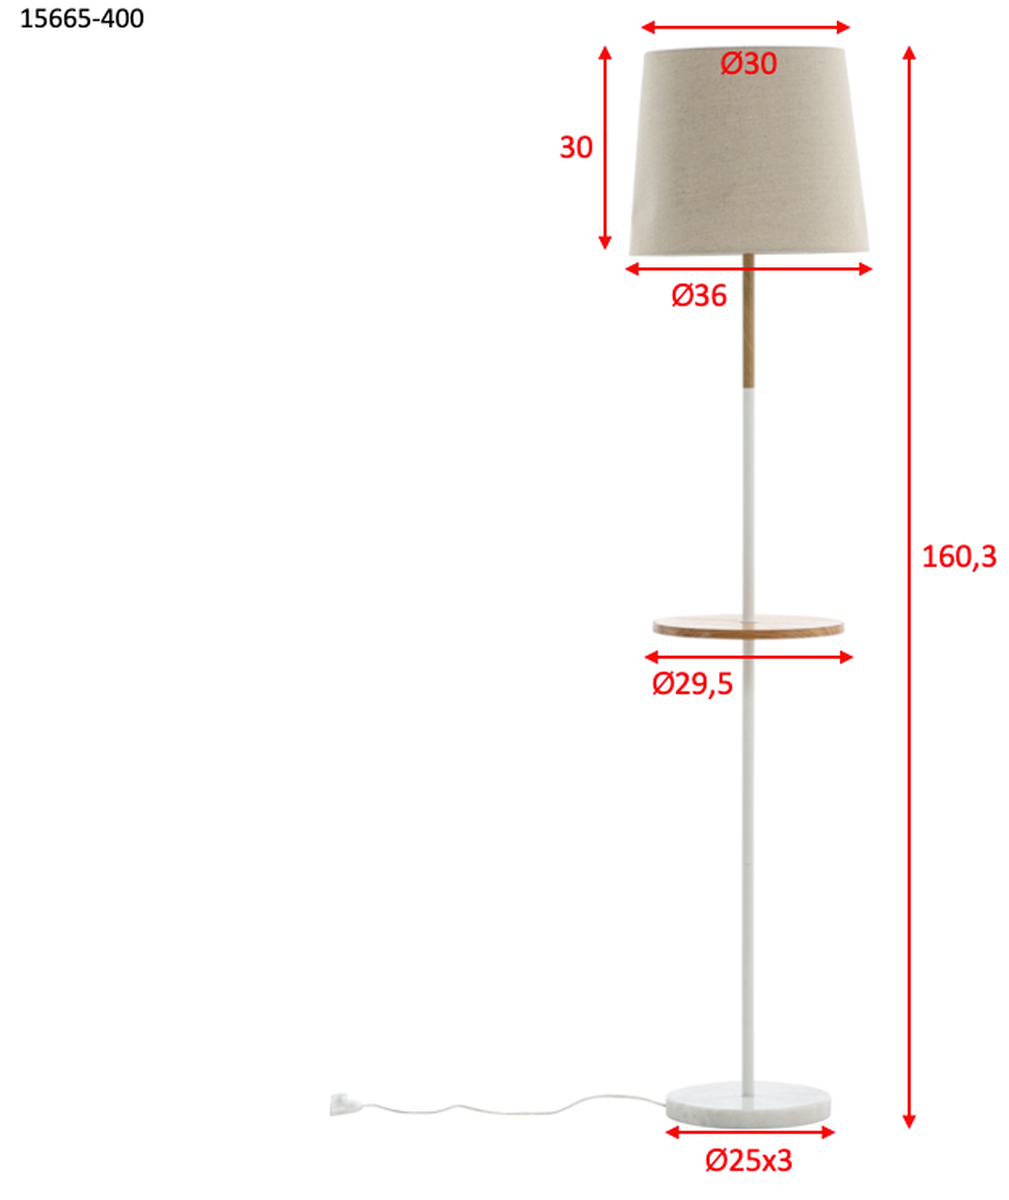 Hattman gulvlampe 165 cm - Hvit/Beige-Gulvlamper-Venture Home-15665-400-Lightup.no